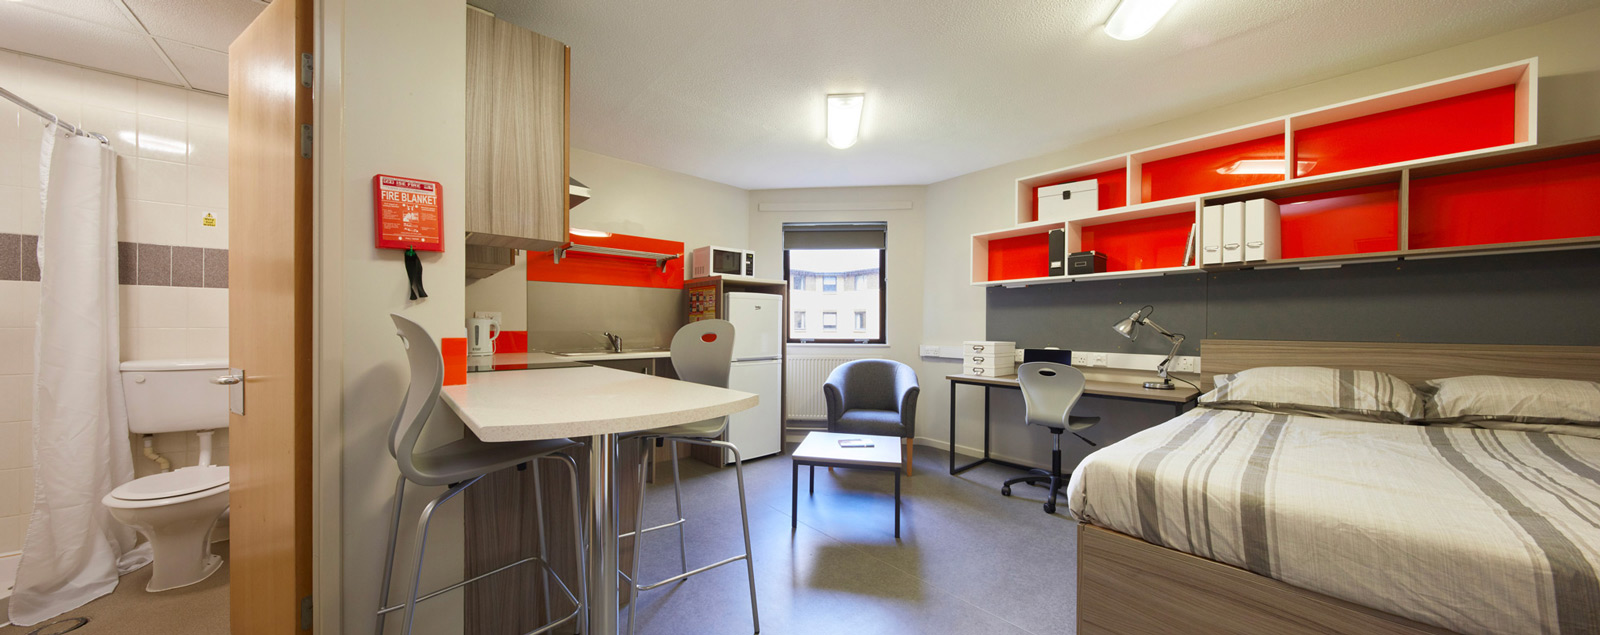 Open plan kitchen and bedroom area in single studio at Scholars Green